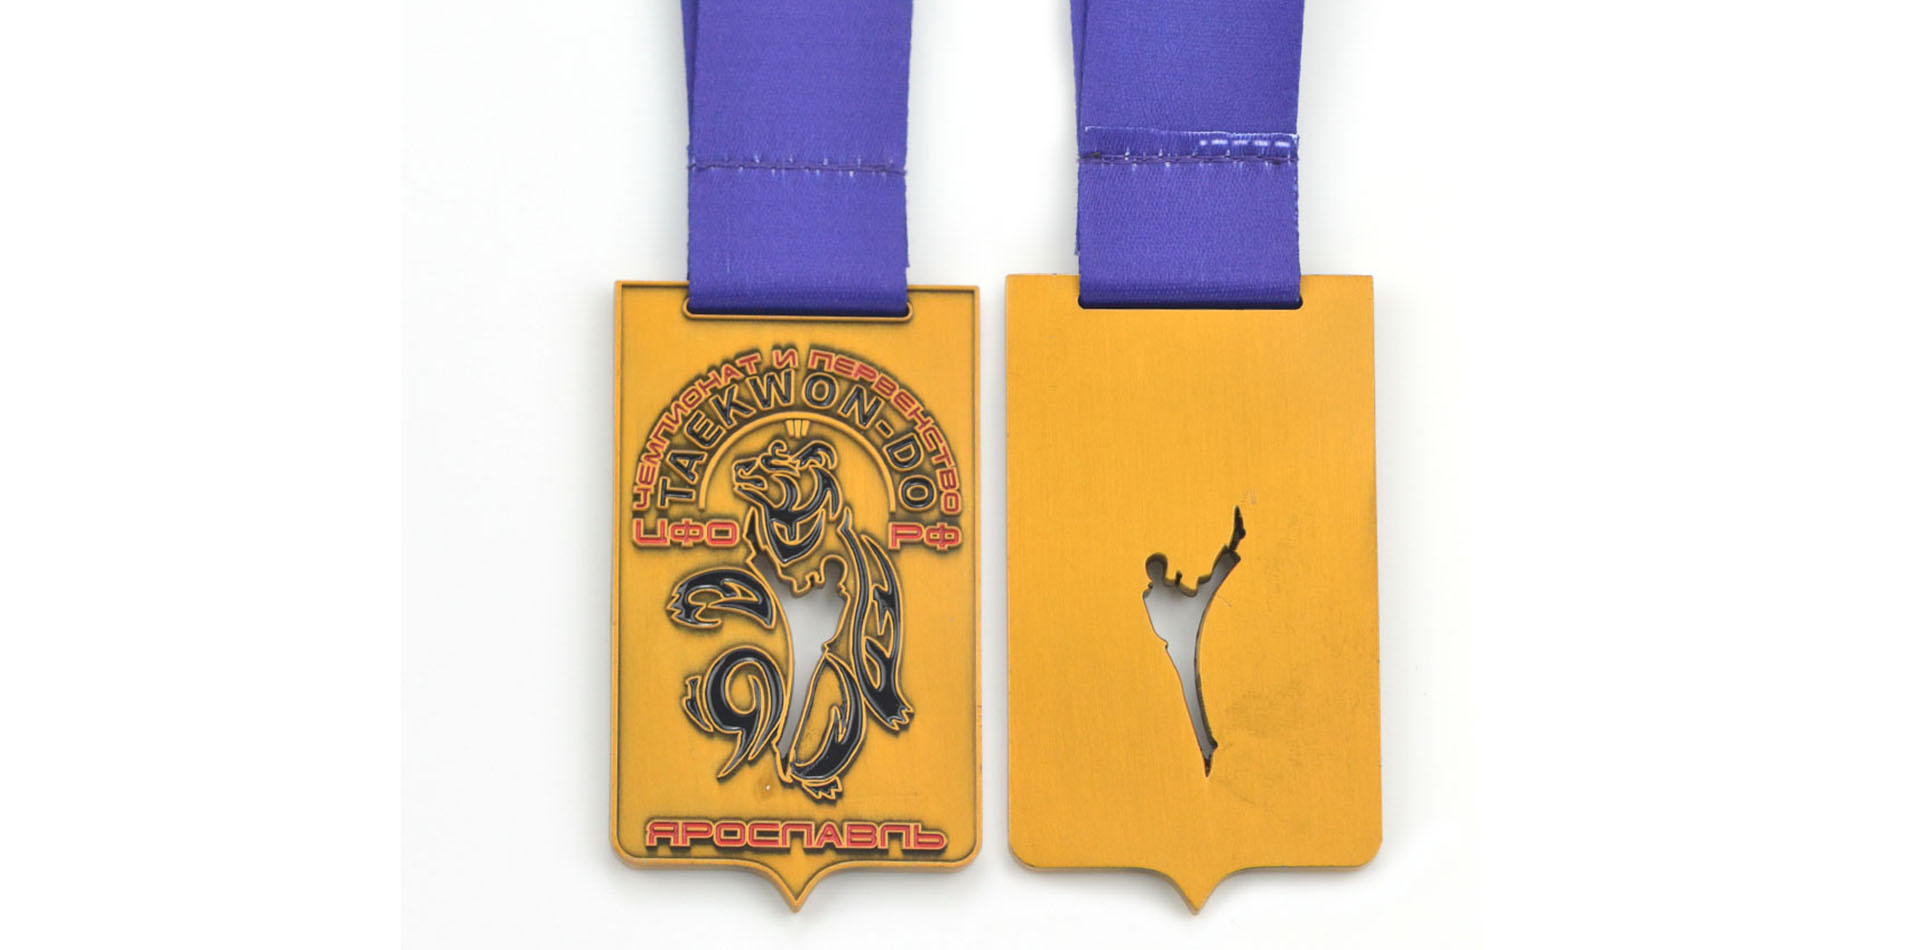 Custom Metal Medals